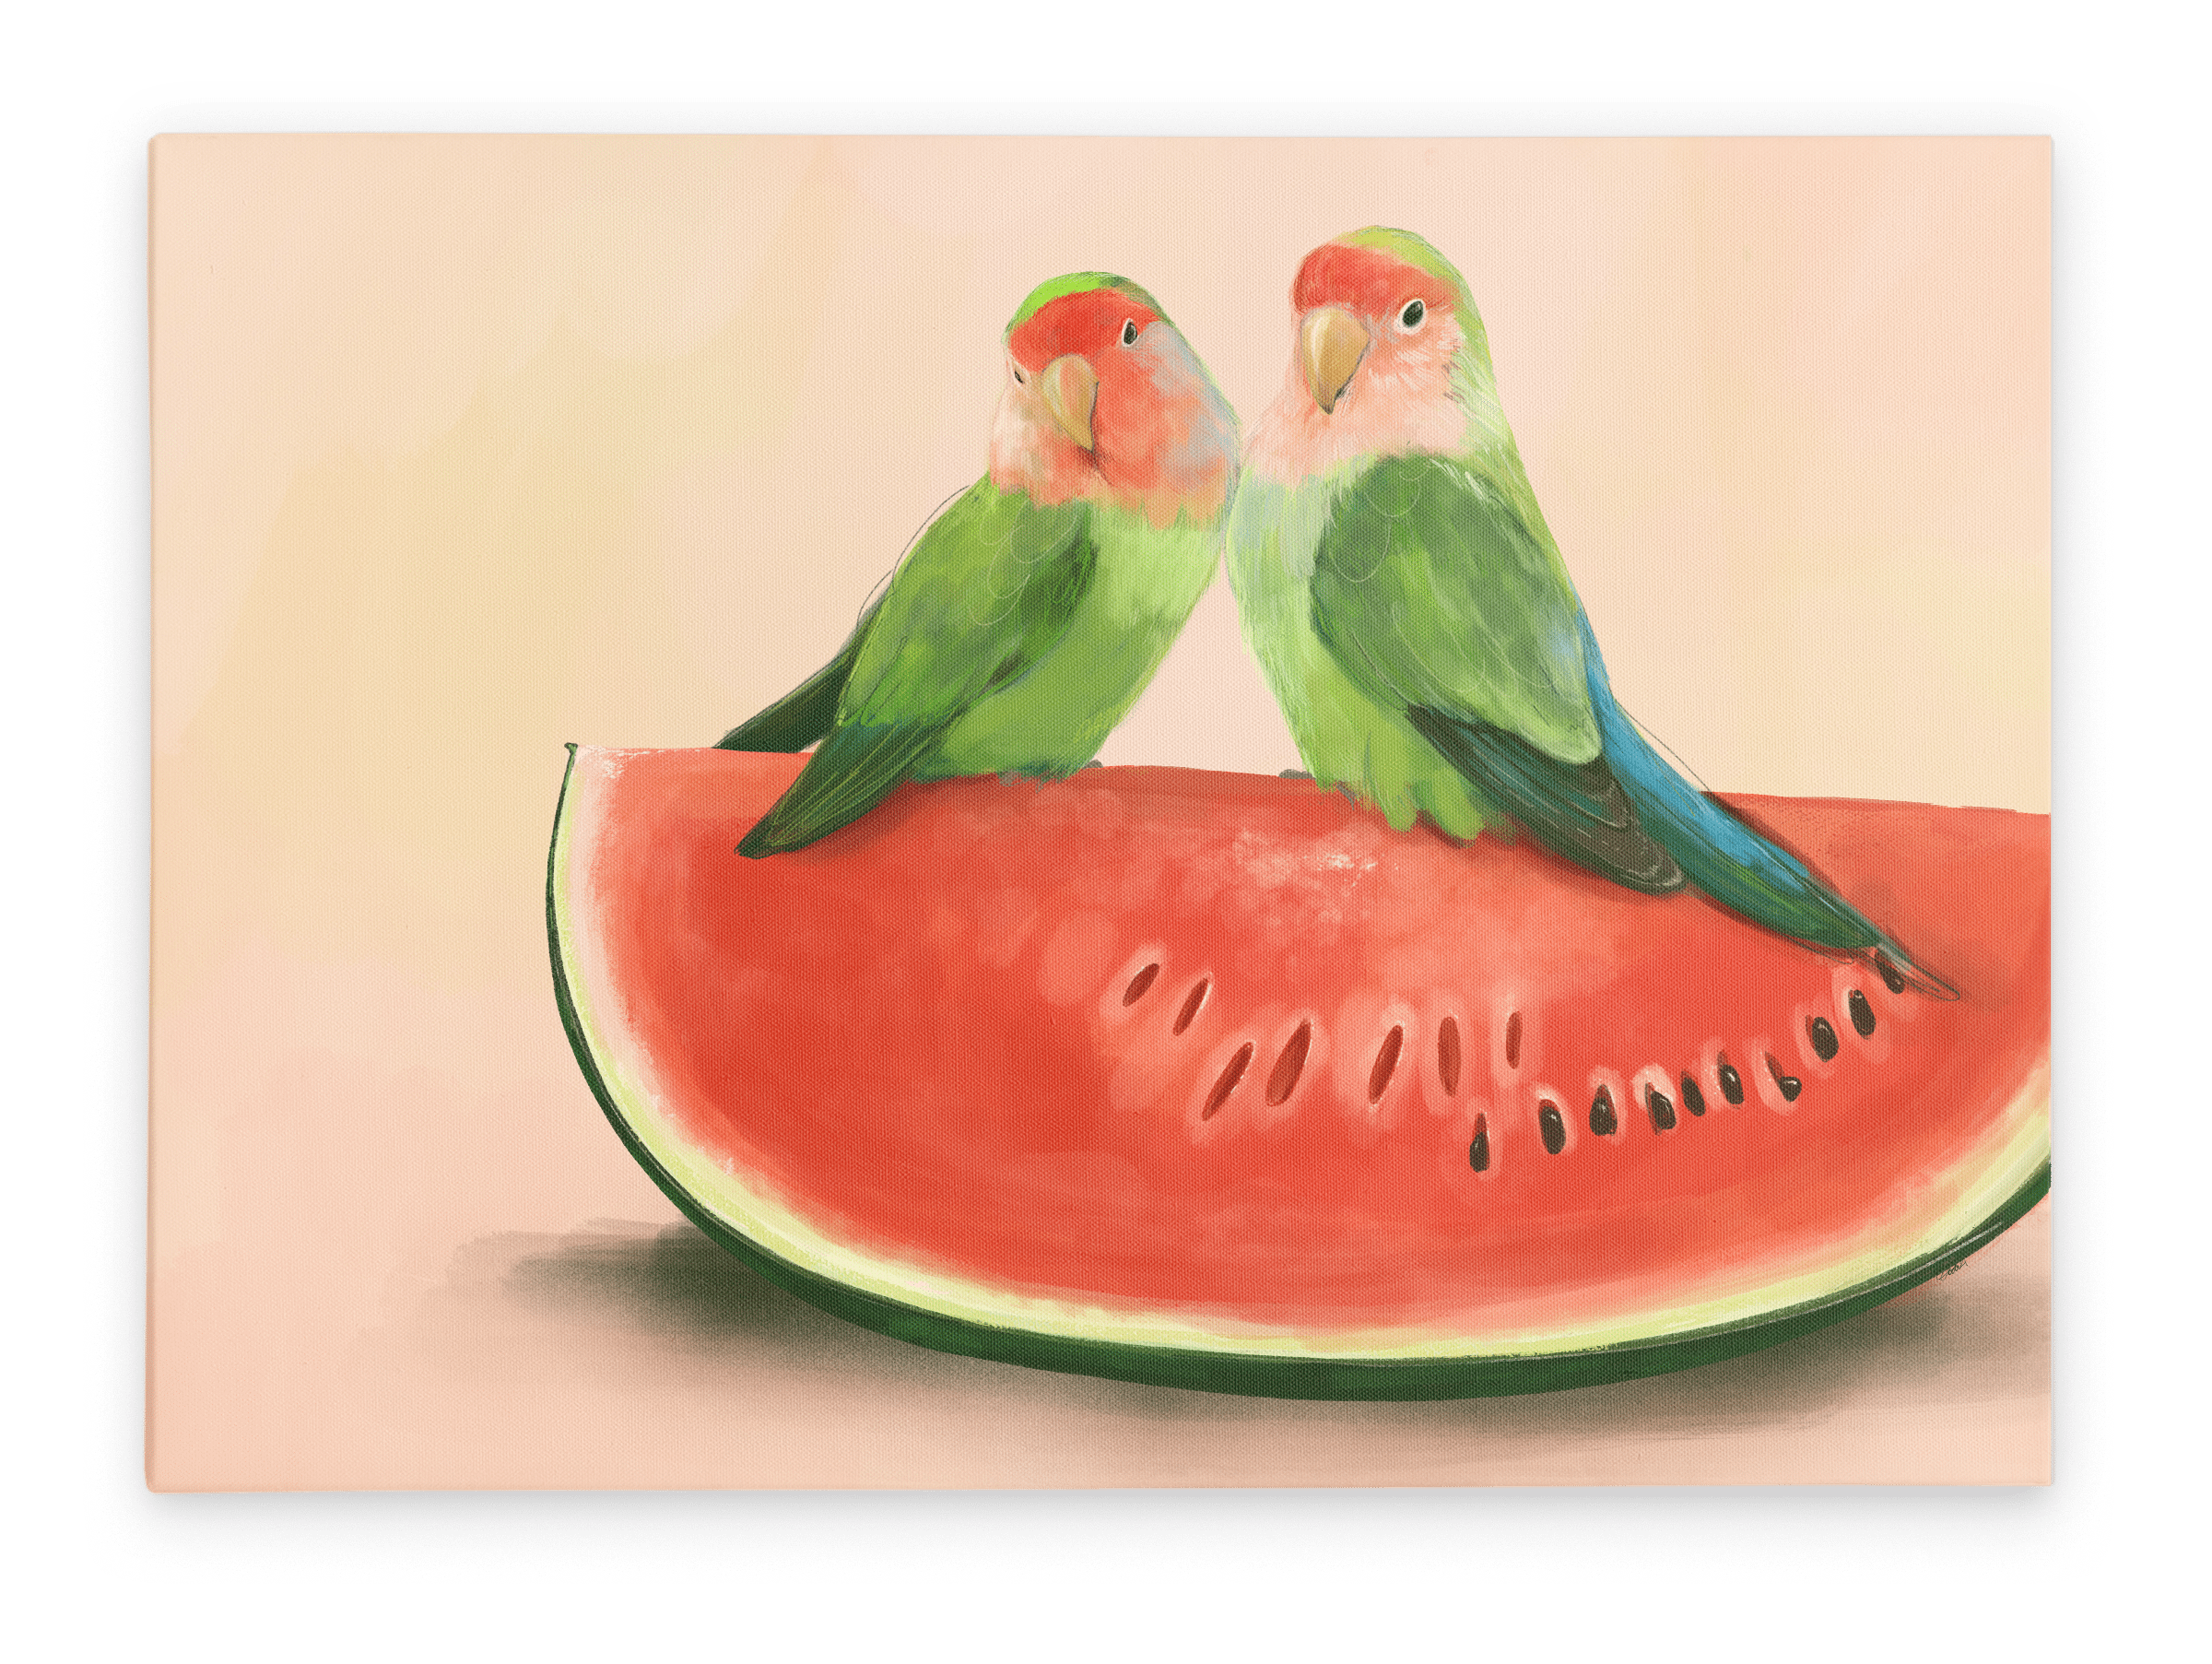 Watermelon Lovebirds Canvas Print The Gathering 28"x40"(70x100 cm) Canvas Print